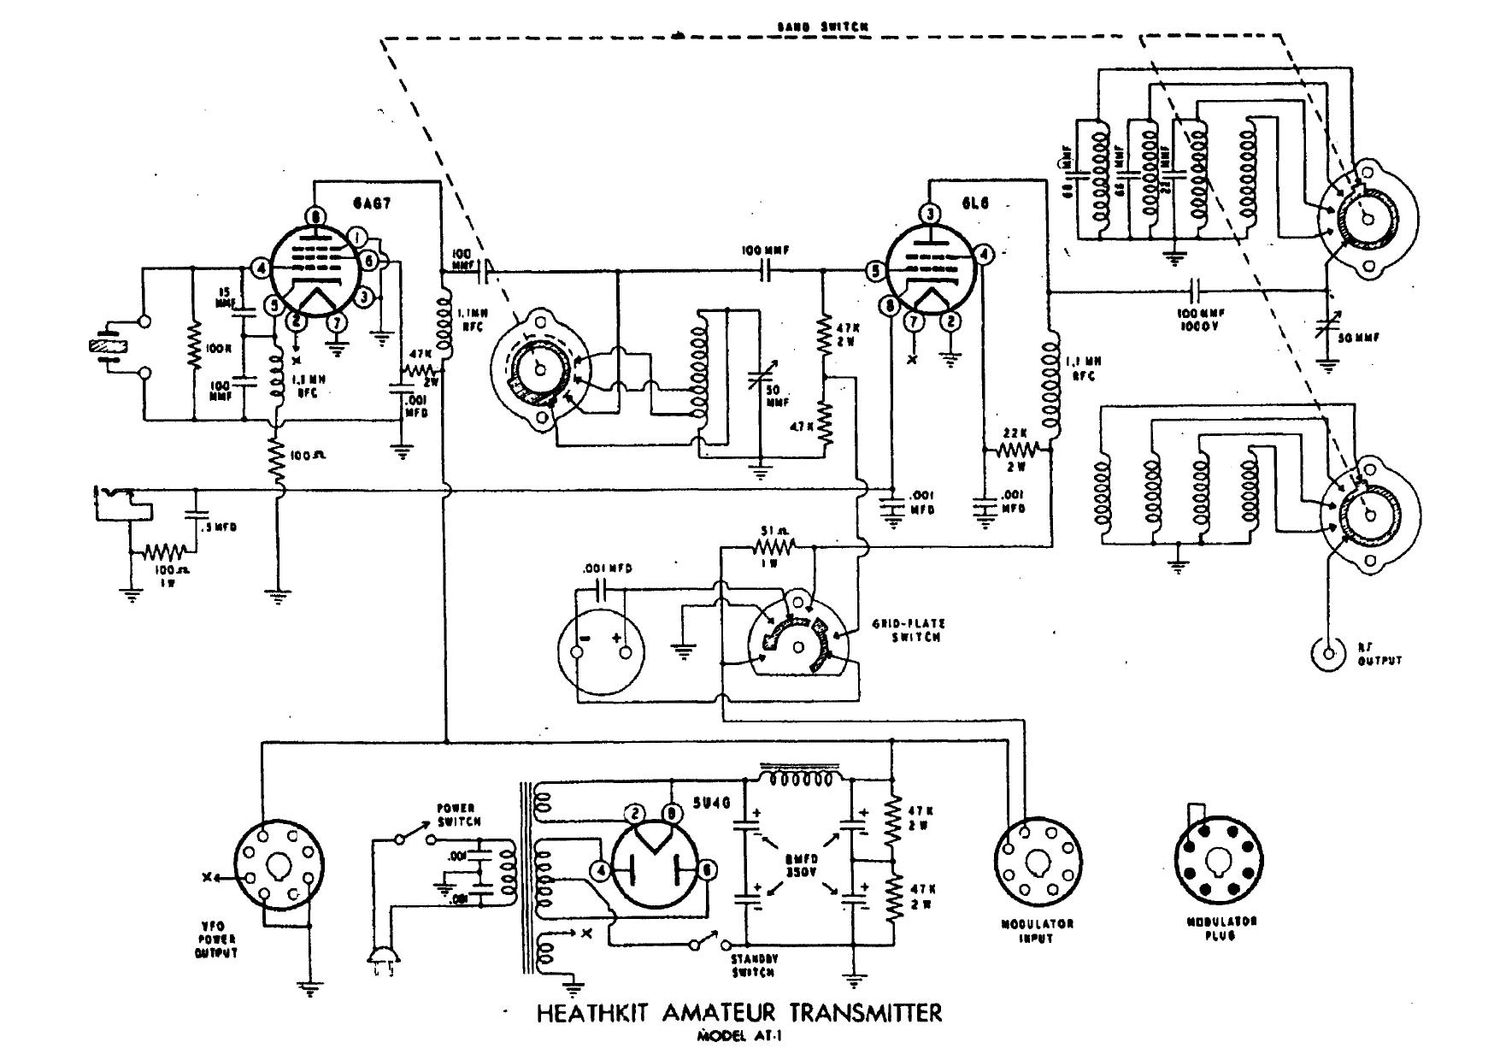 Assembly Manual-Anleitung für Heathkit AT-1